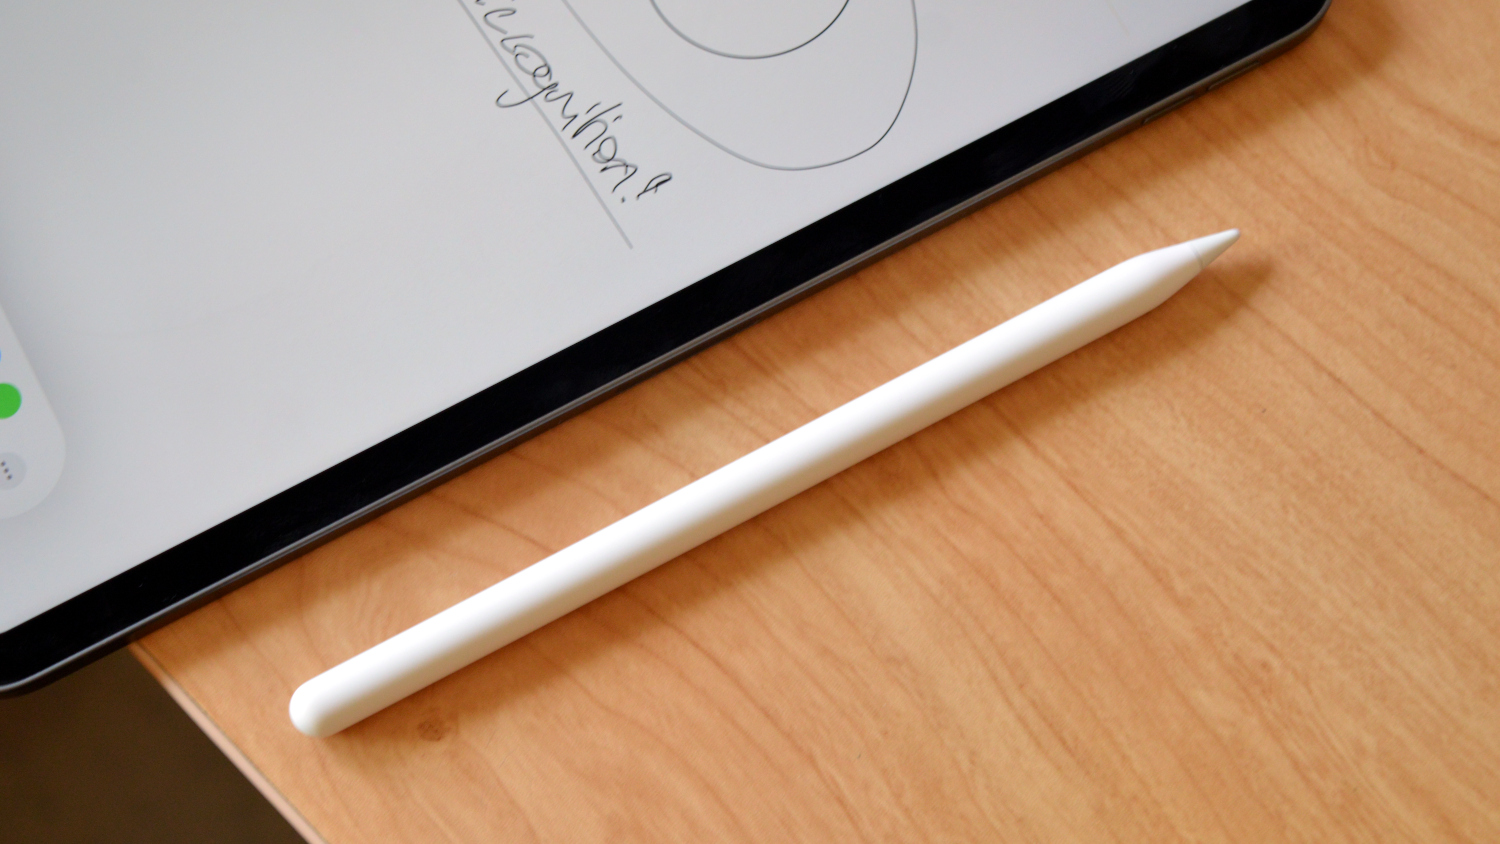 Pencil 2 Everyone's New Sidekick | Digital Trends